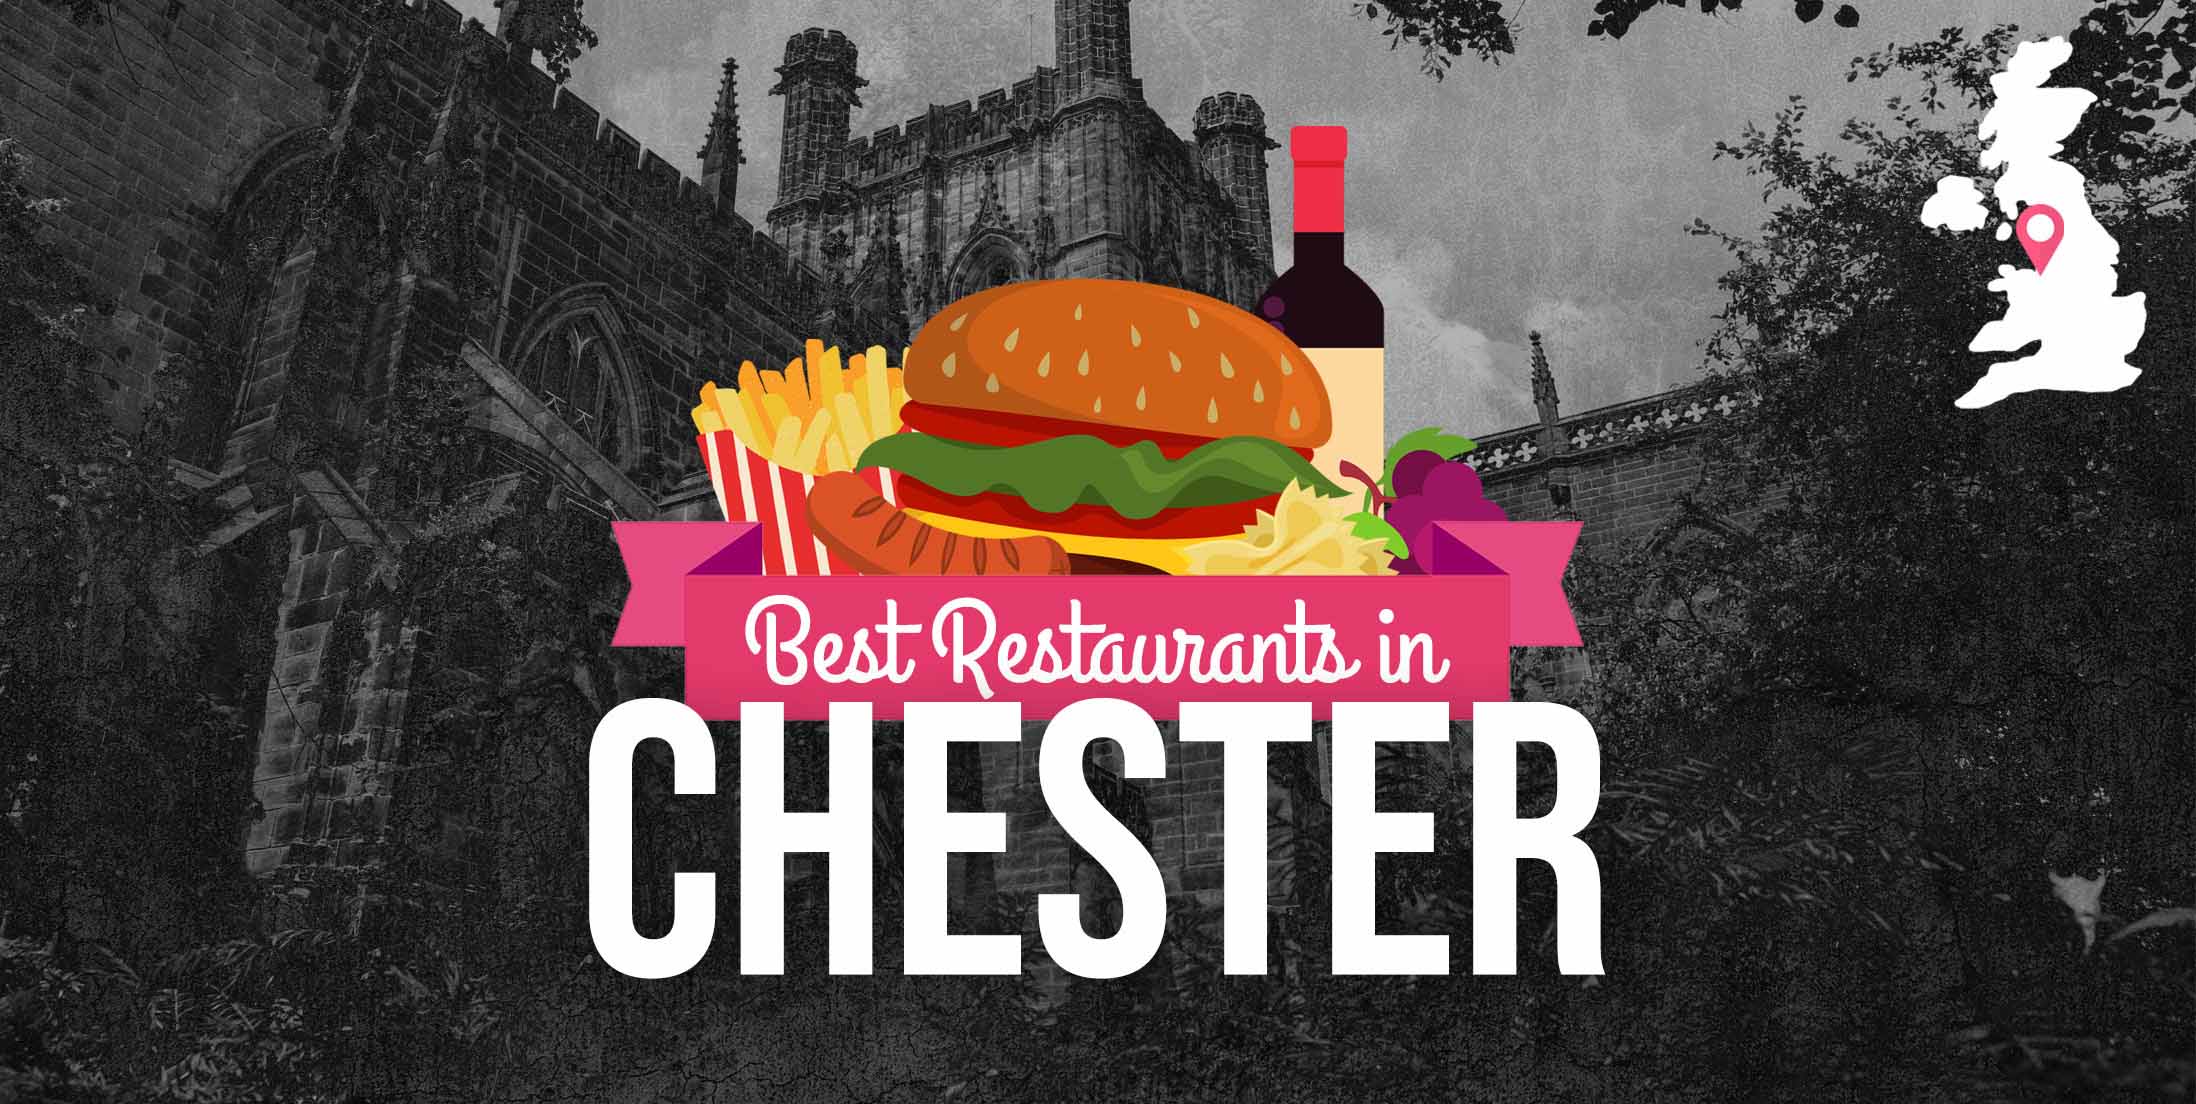 Best Restaurants in Chester